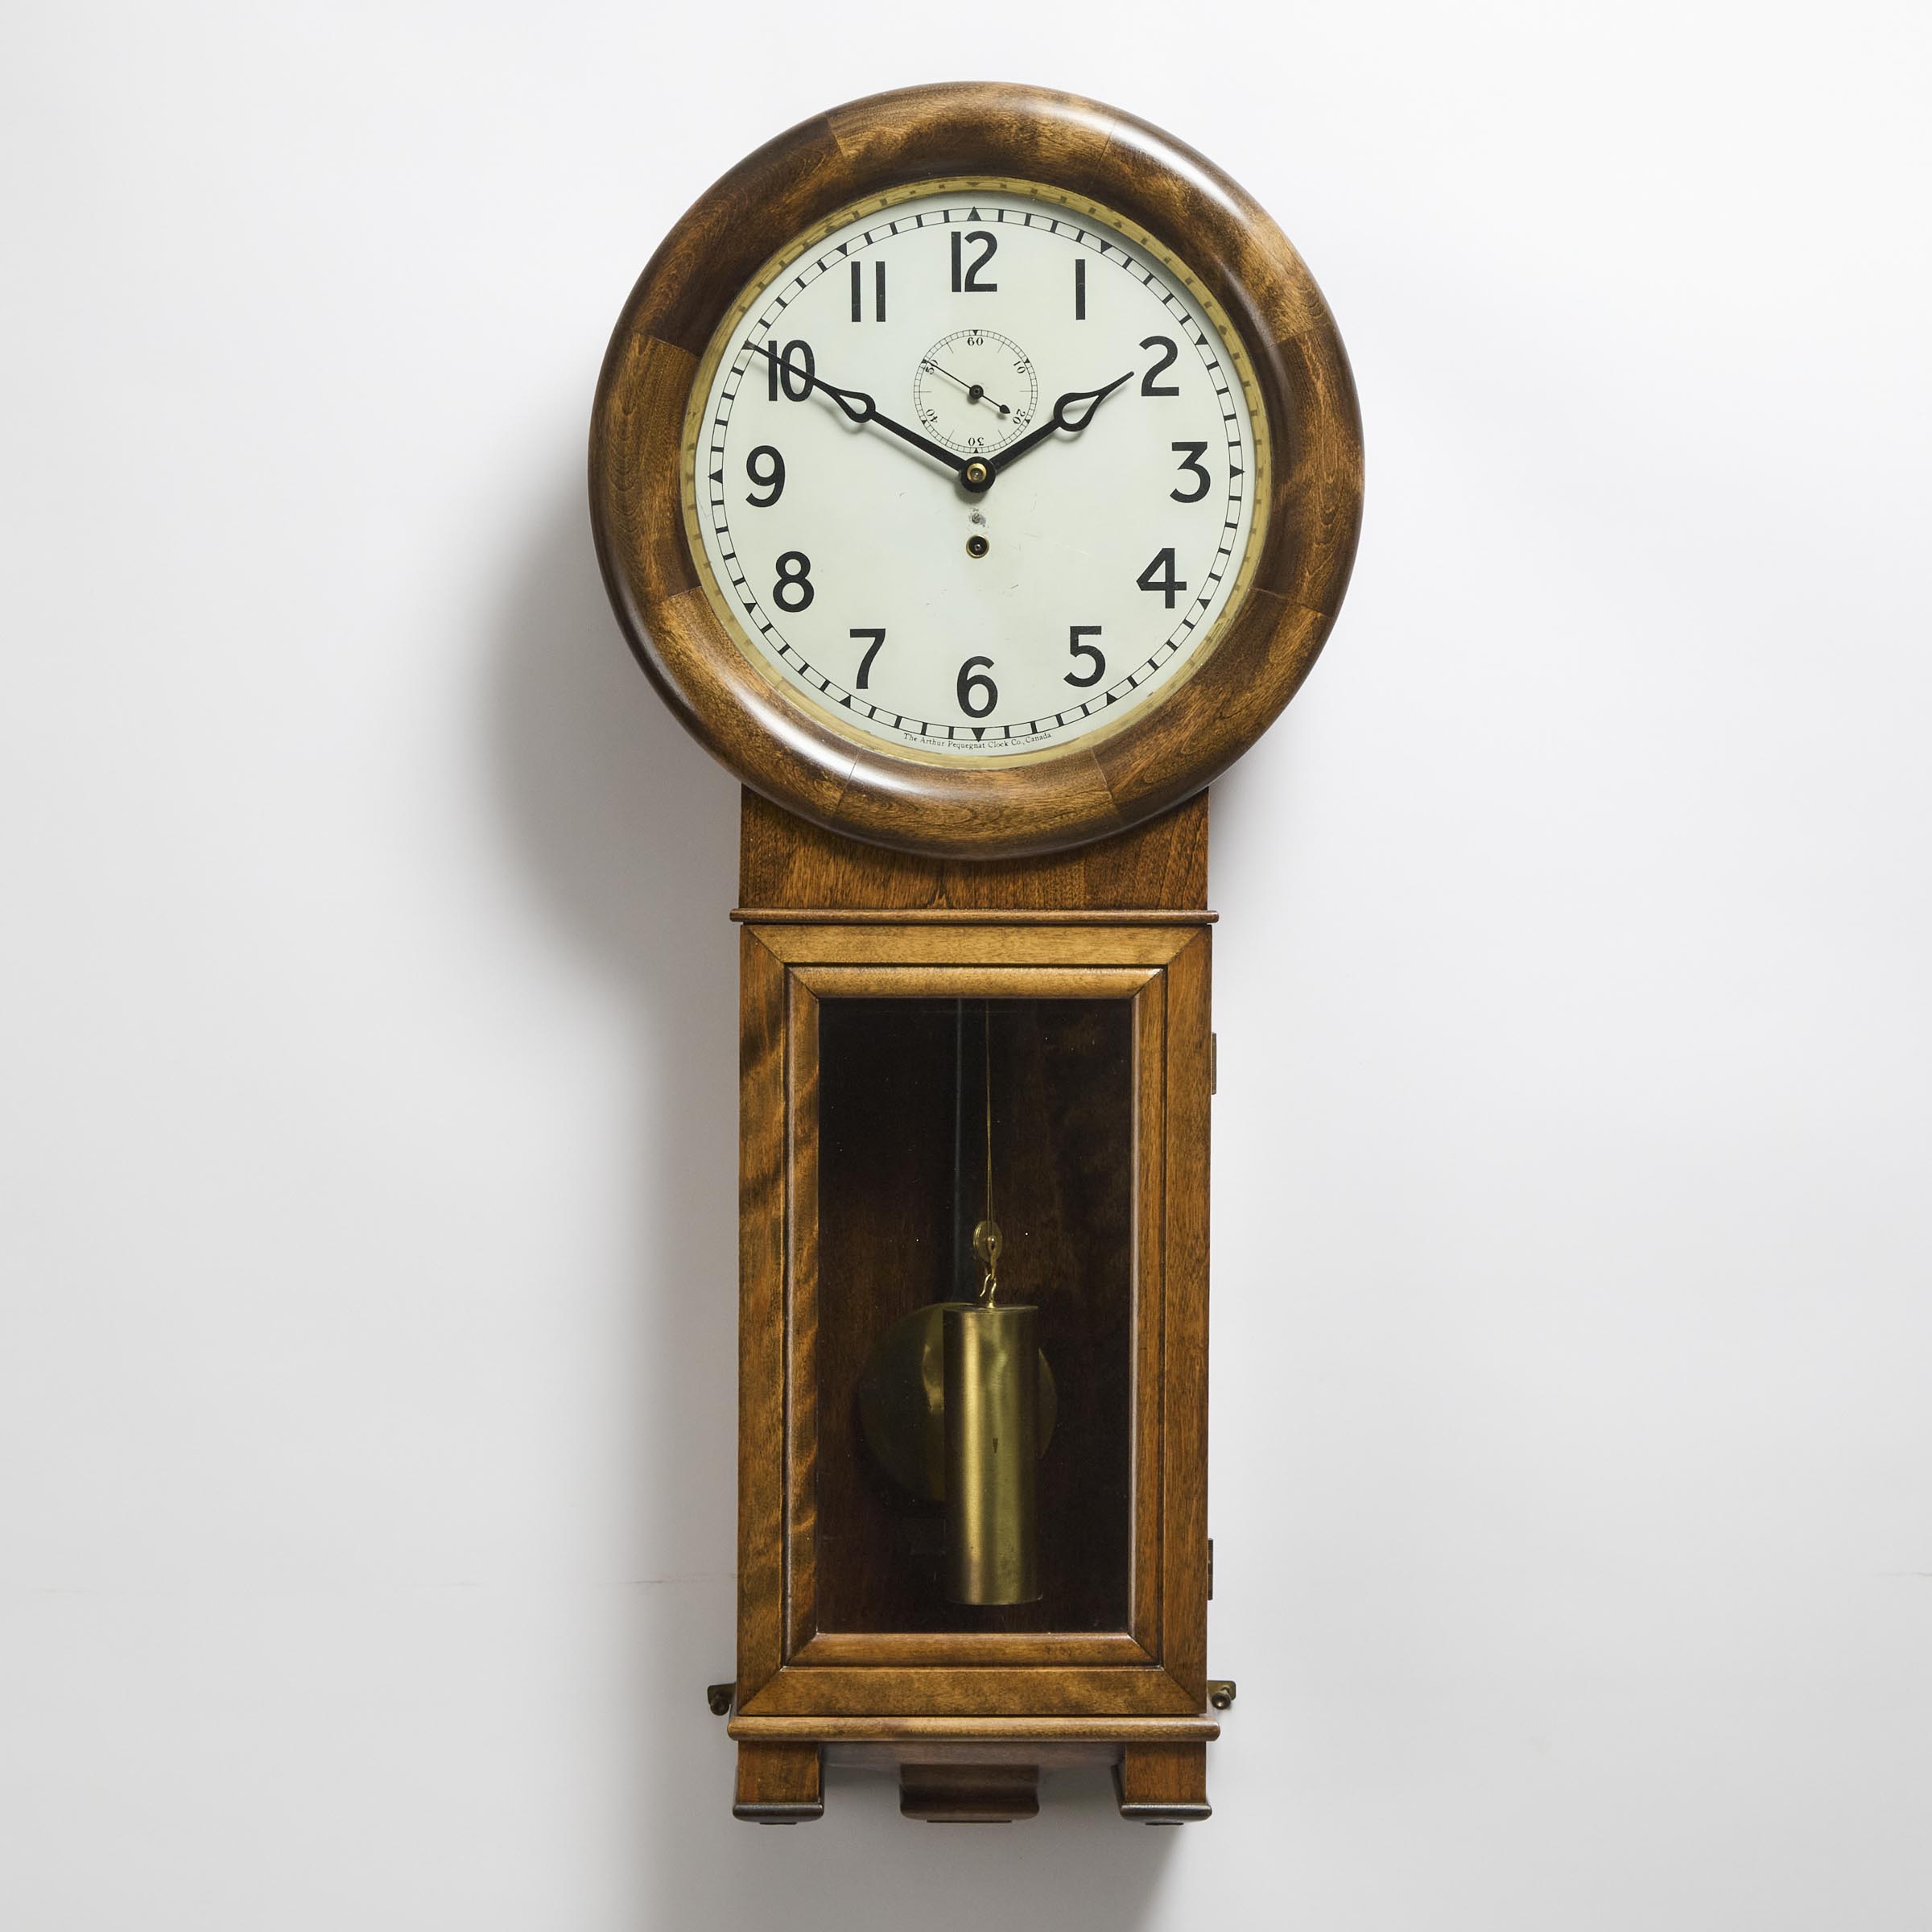 Arthur Pequegnat Clock Co. Regulator